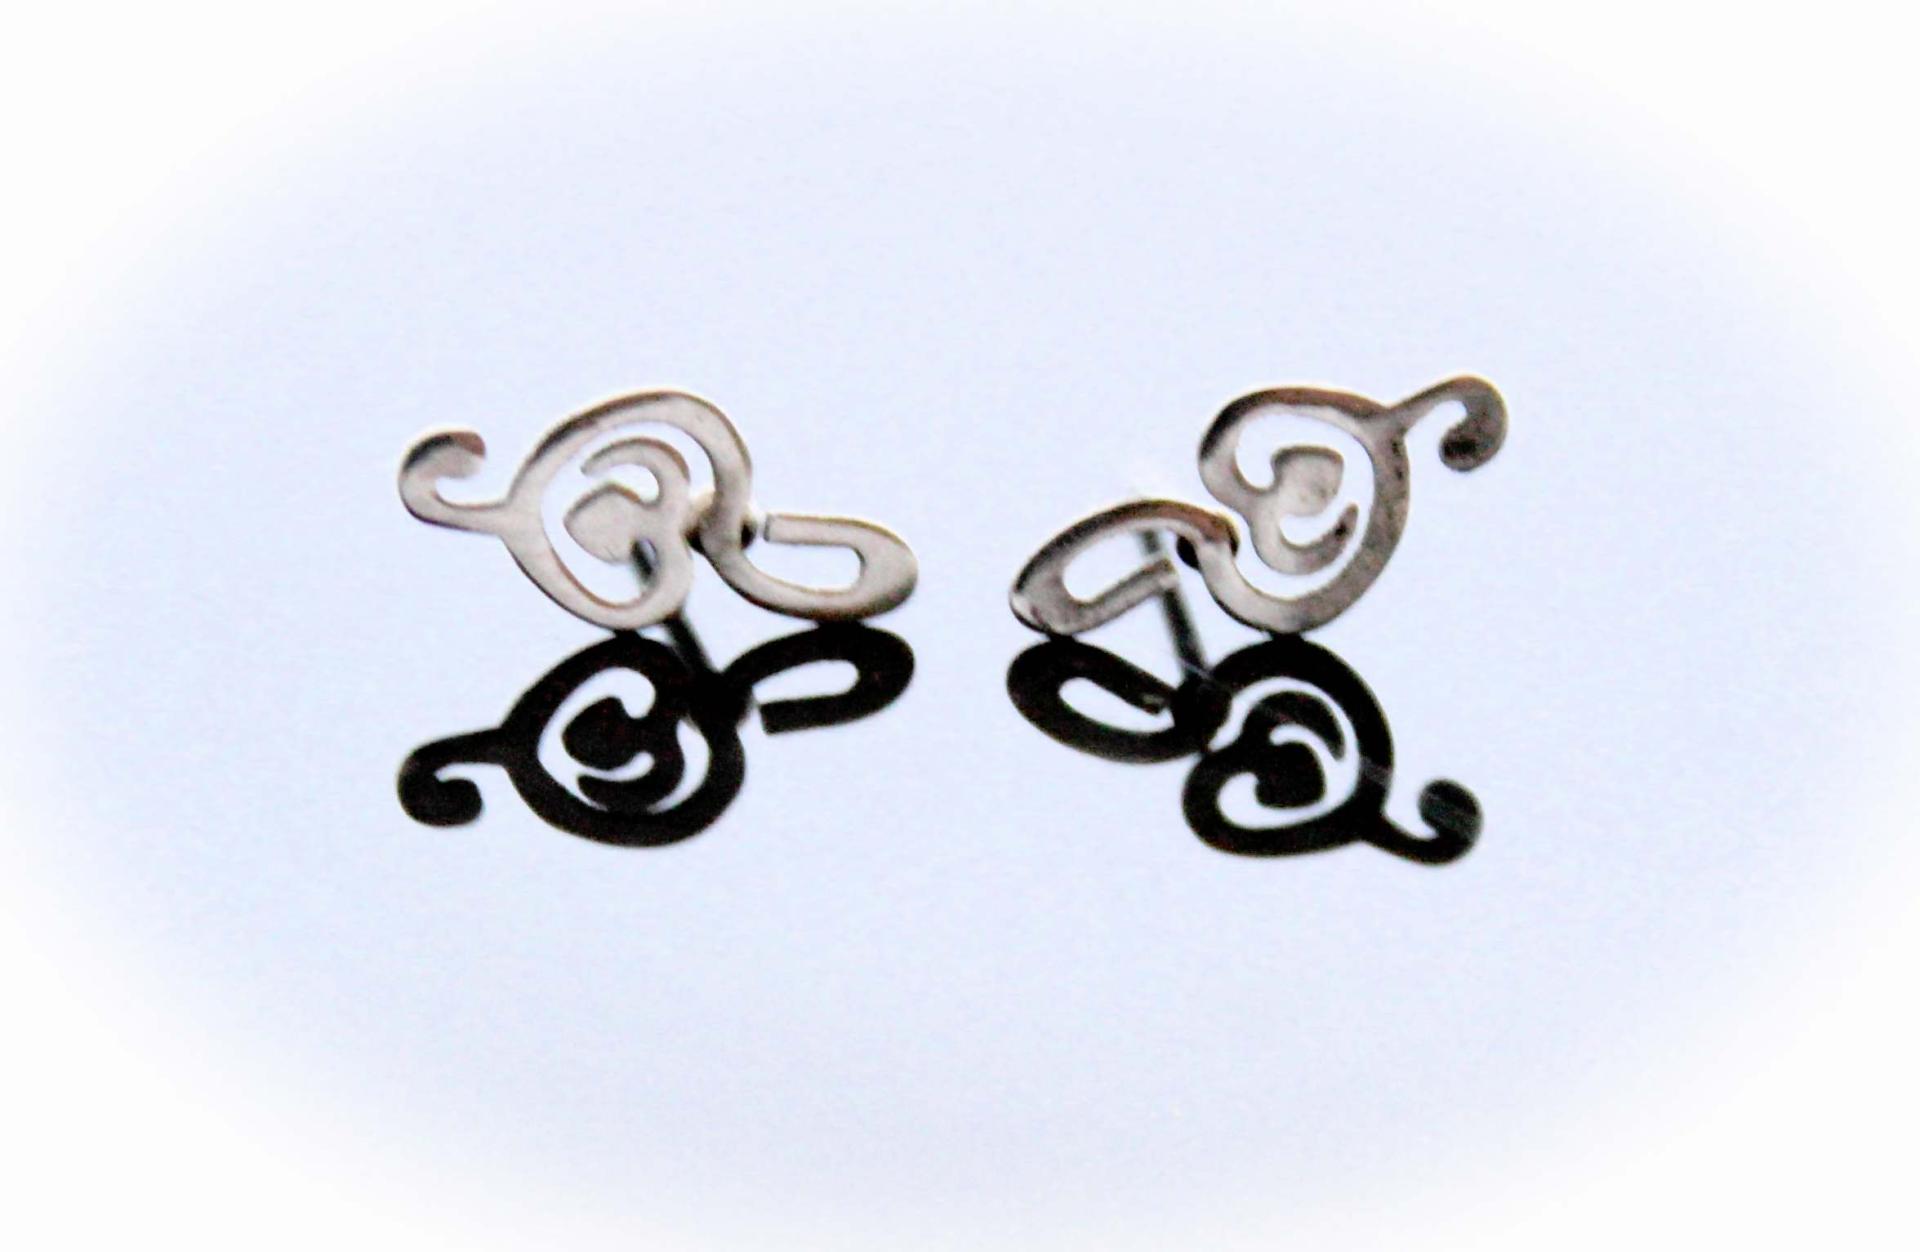 Treble Clef Earrings in Stainless Steel